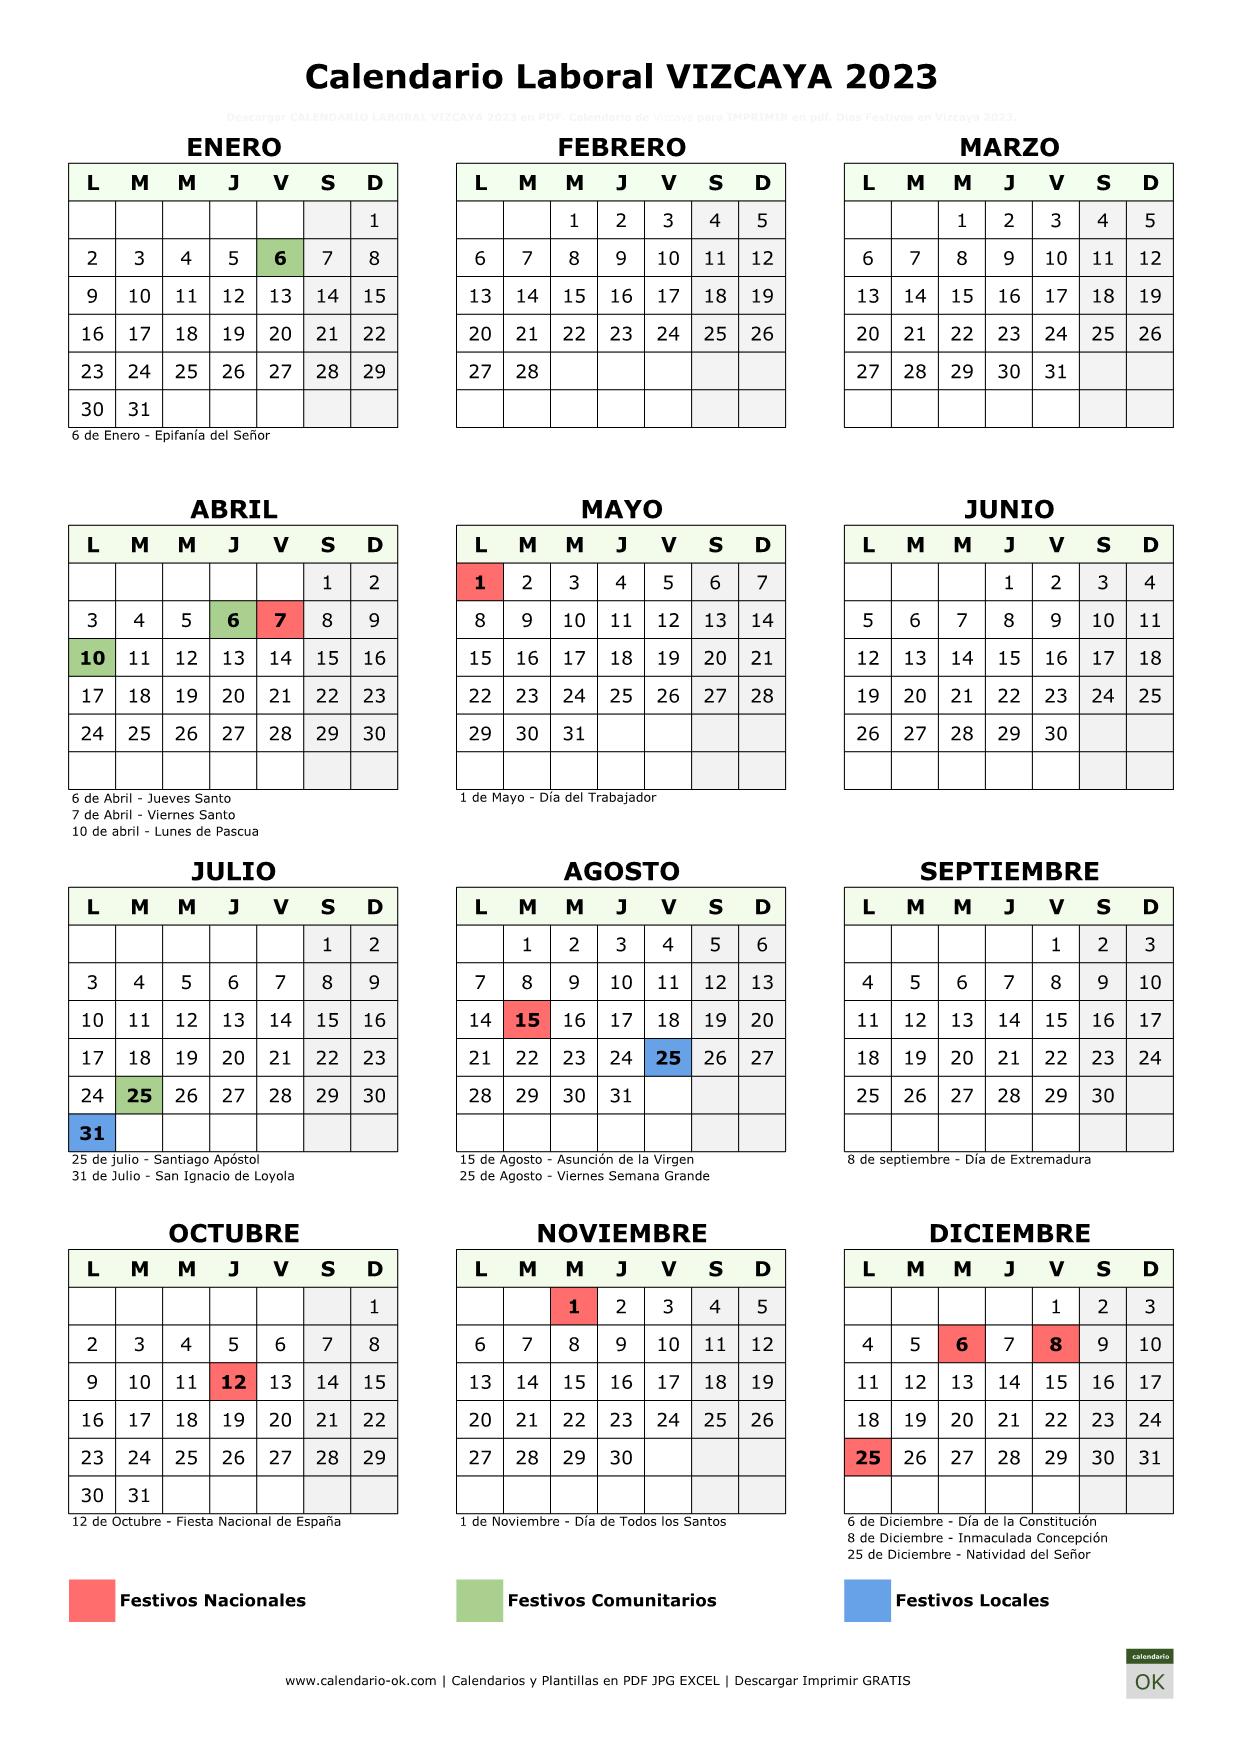 Festivos Bizkaia 2022 ▷ Calendario Laboral VIZCAYA 2023 con Festivos